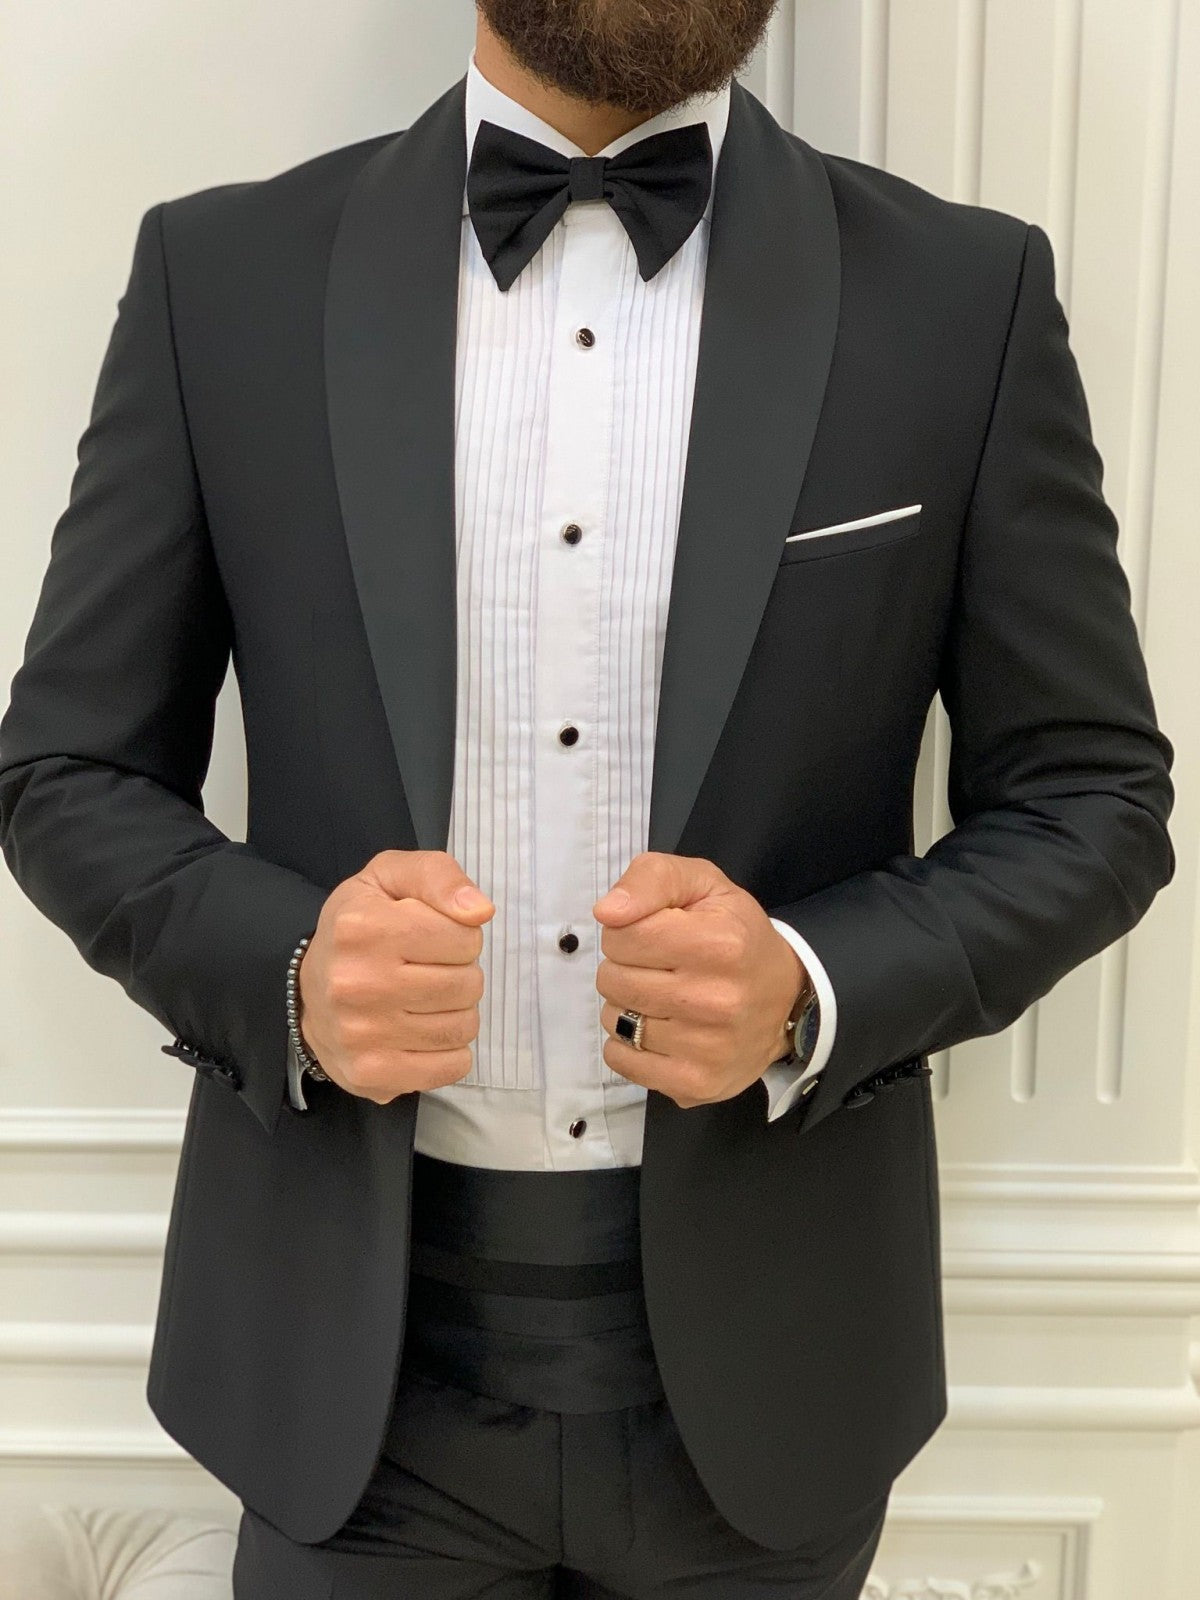 Black Shawl Collar Italian Cut Men's Groom Suit